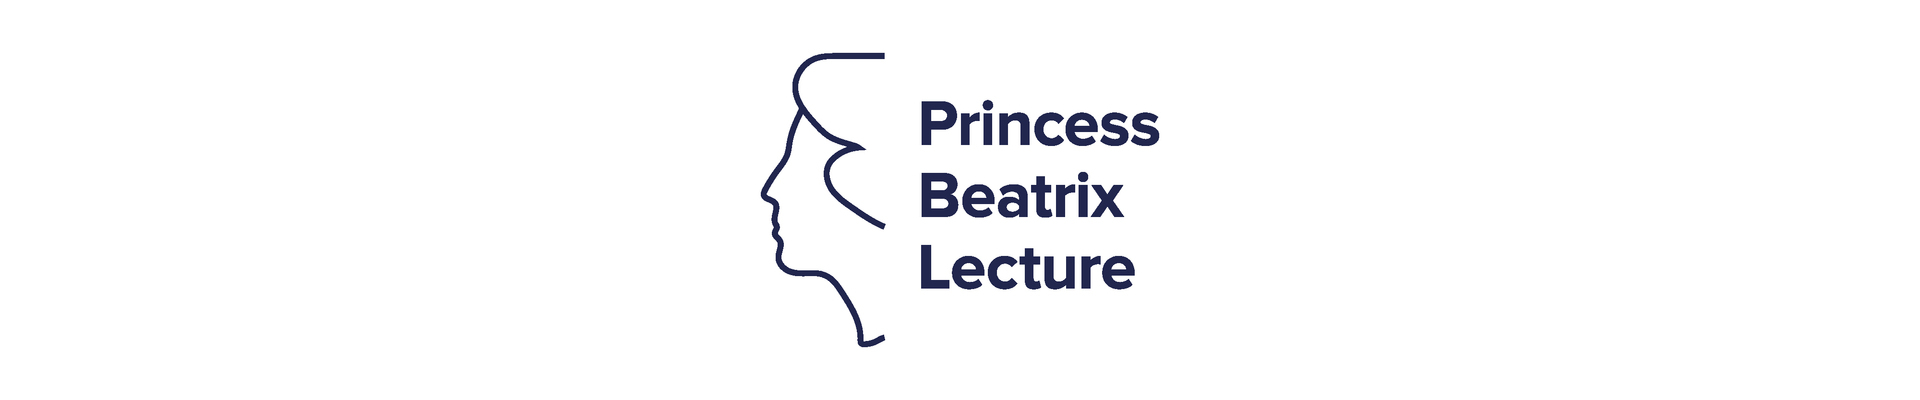 Princess Beatrix Lecture